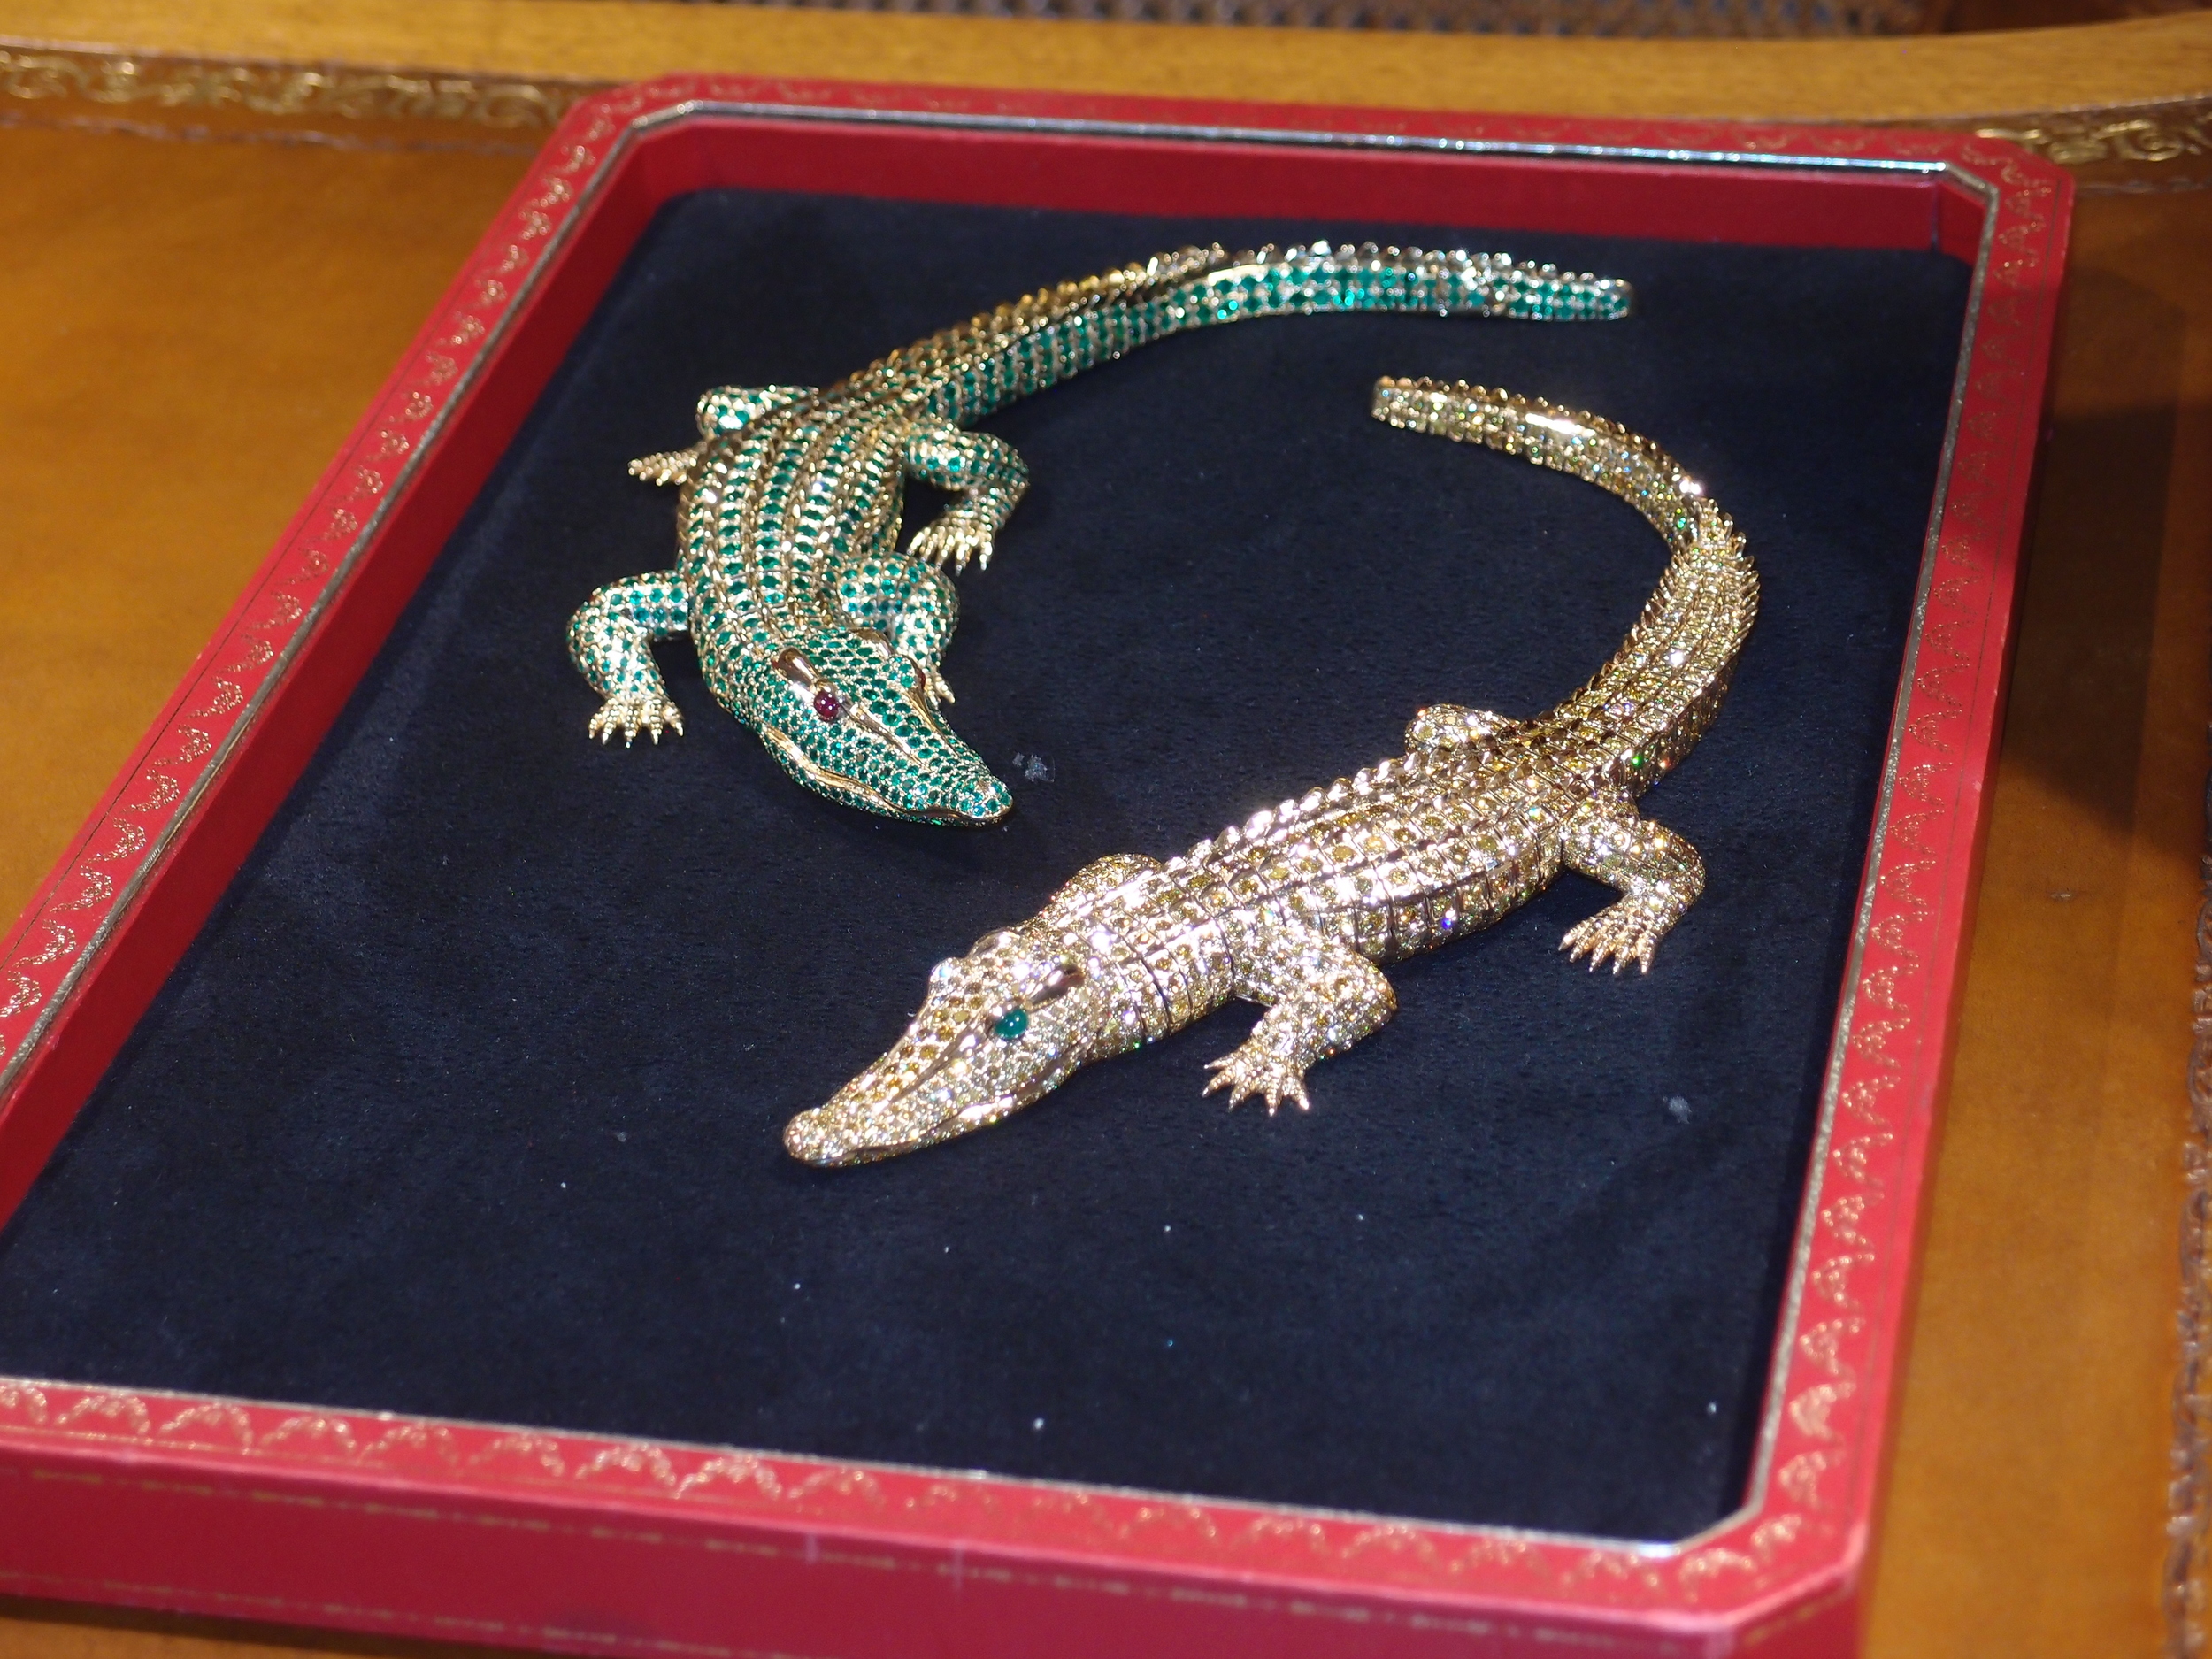 cartier crocodile necklace